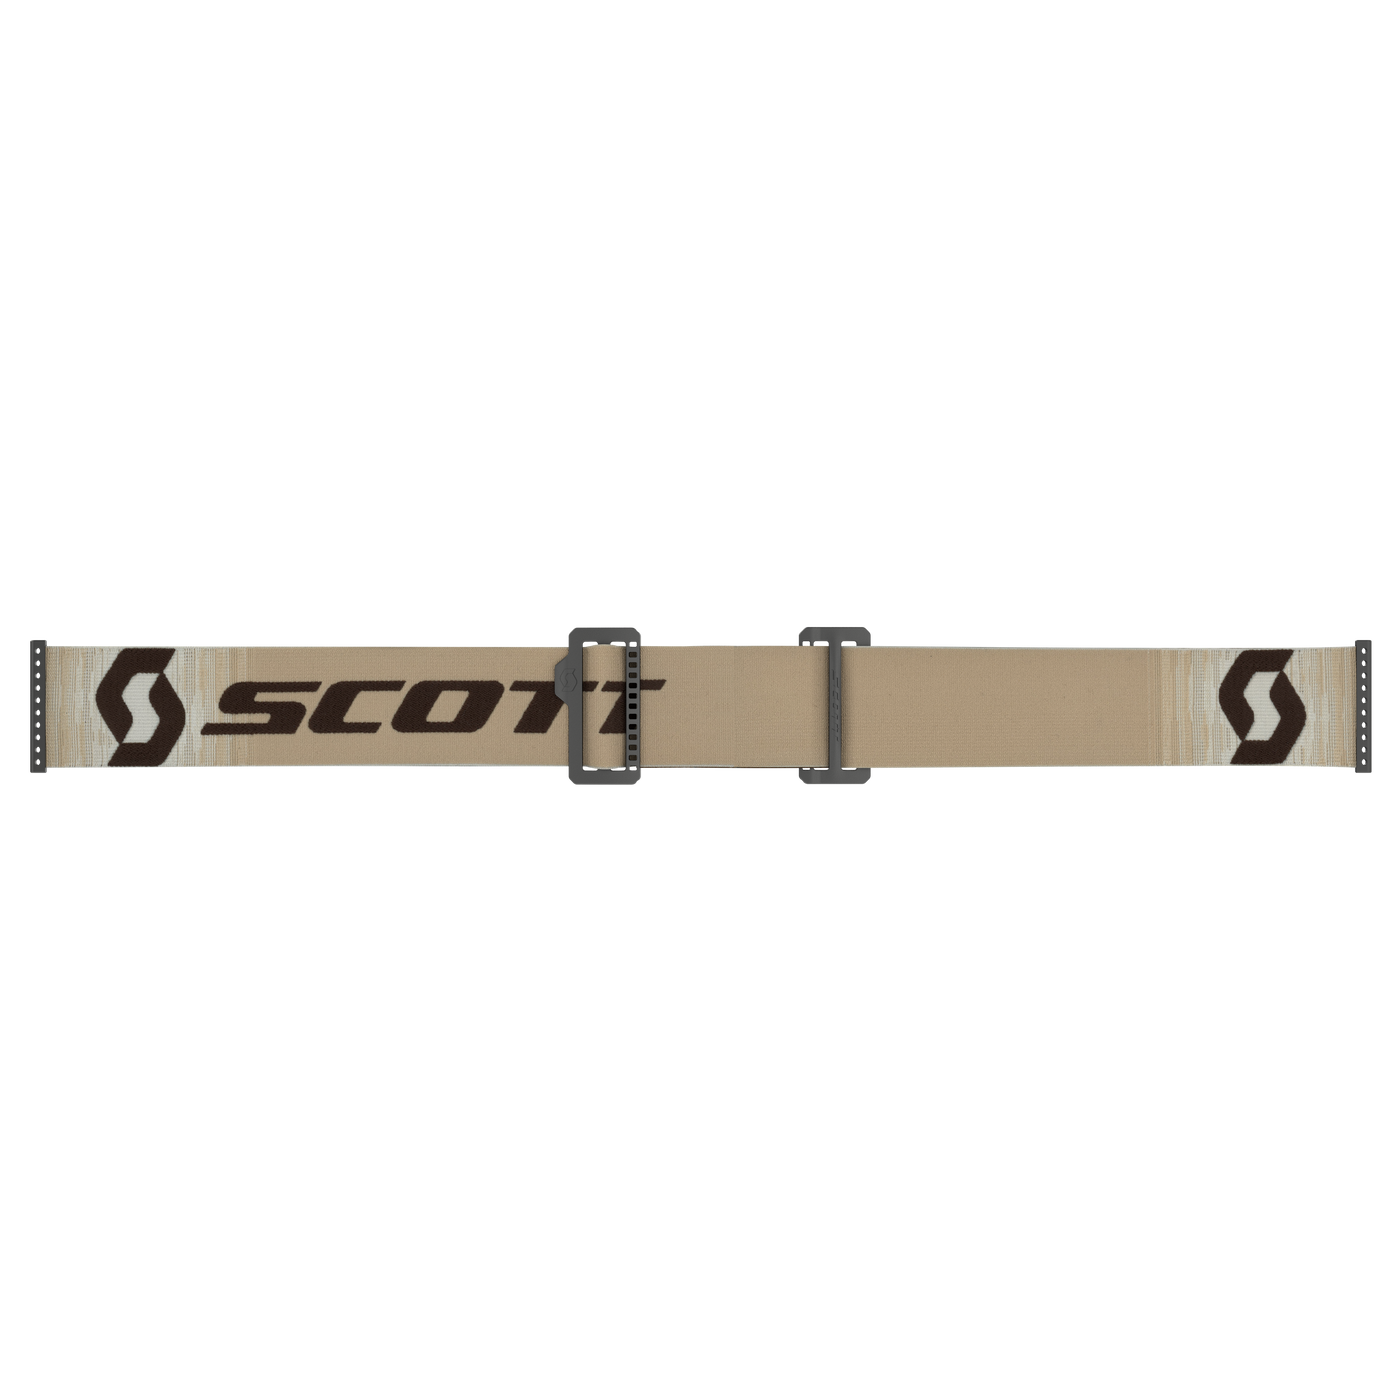 Scott Prospect Goggle, Beige / Brown – Silver Chrome Works lens